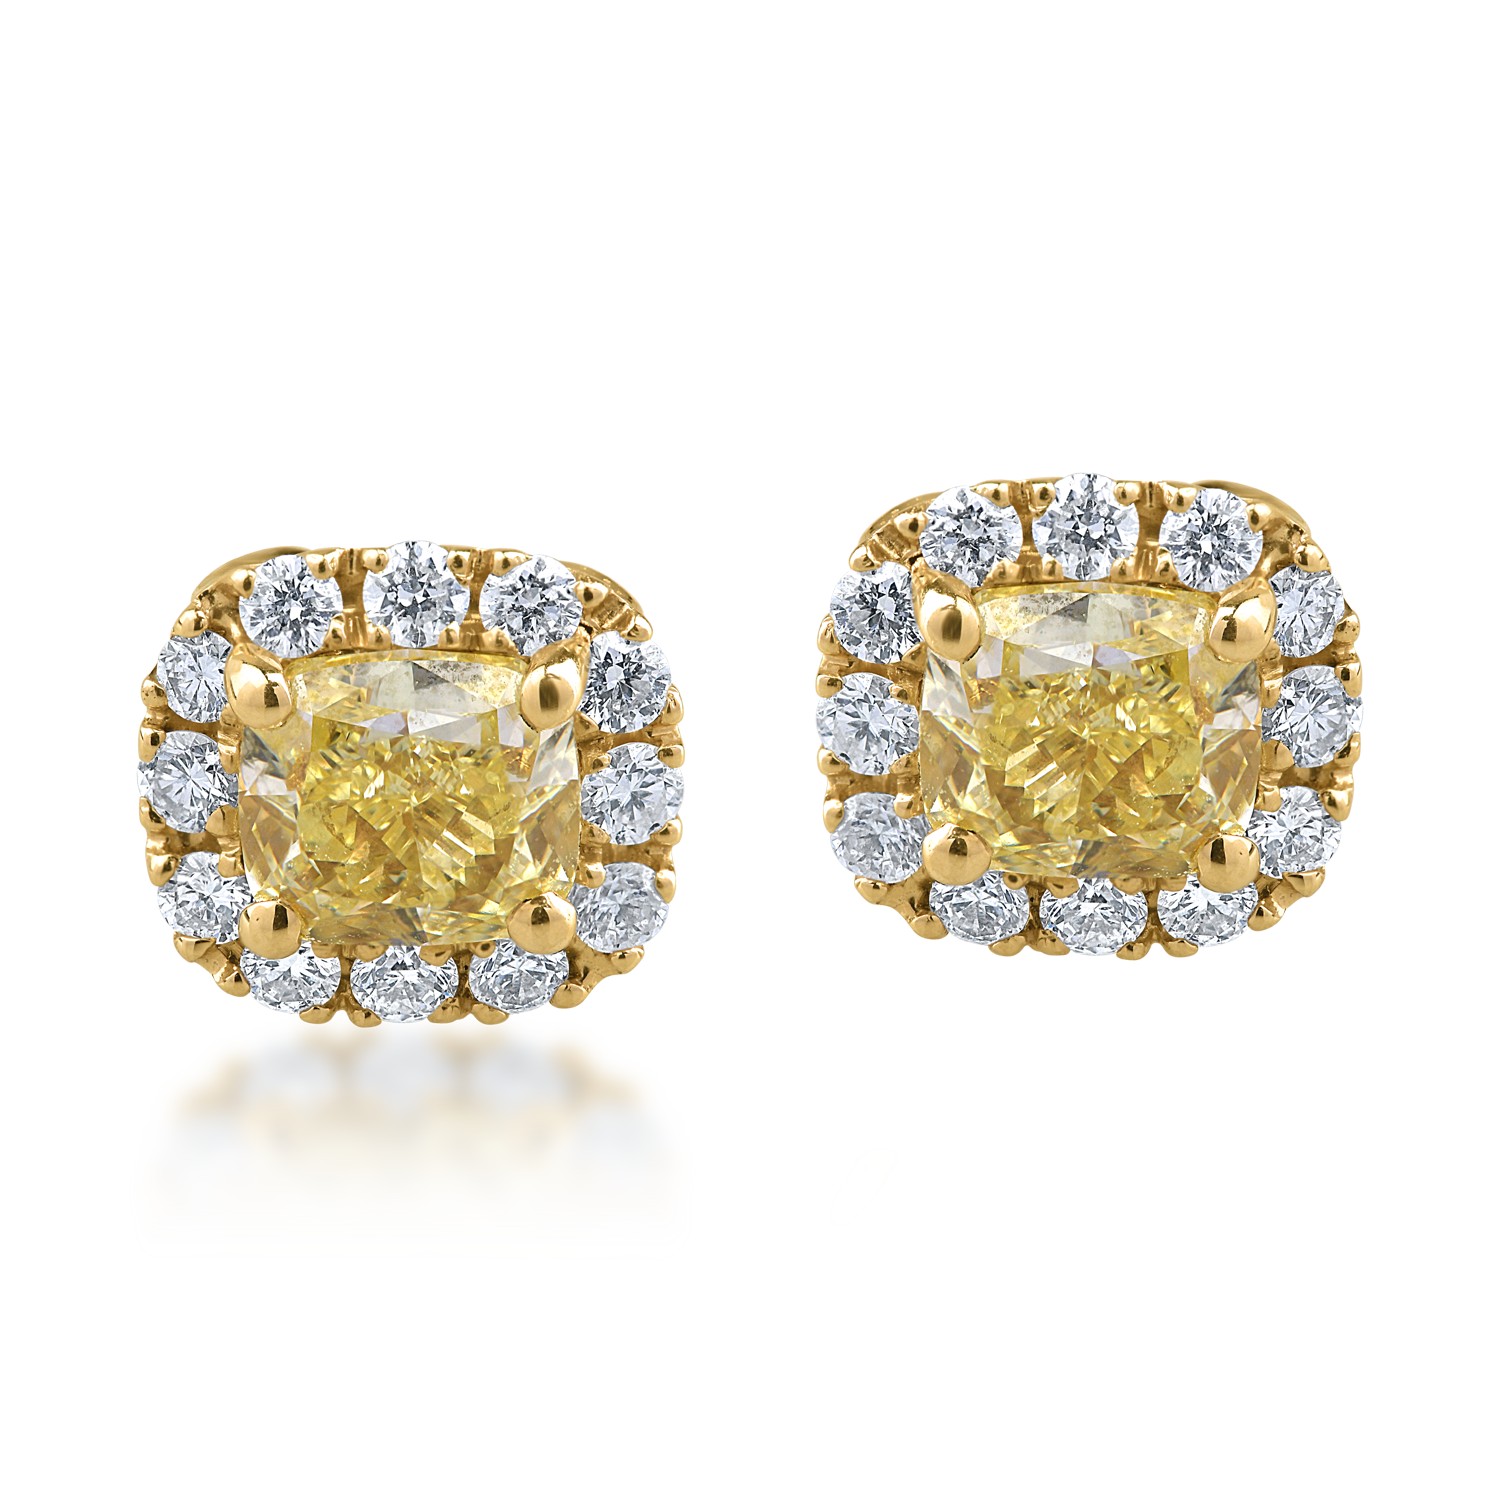 Cercei din aur galben cu diamante fancy galben de 1.22ct si diamante transparente de 0.38ct